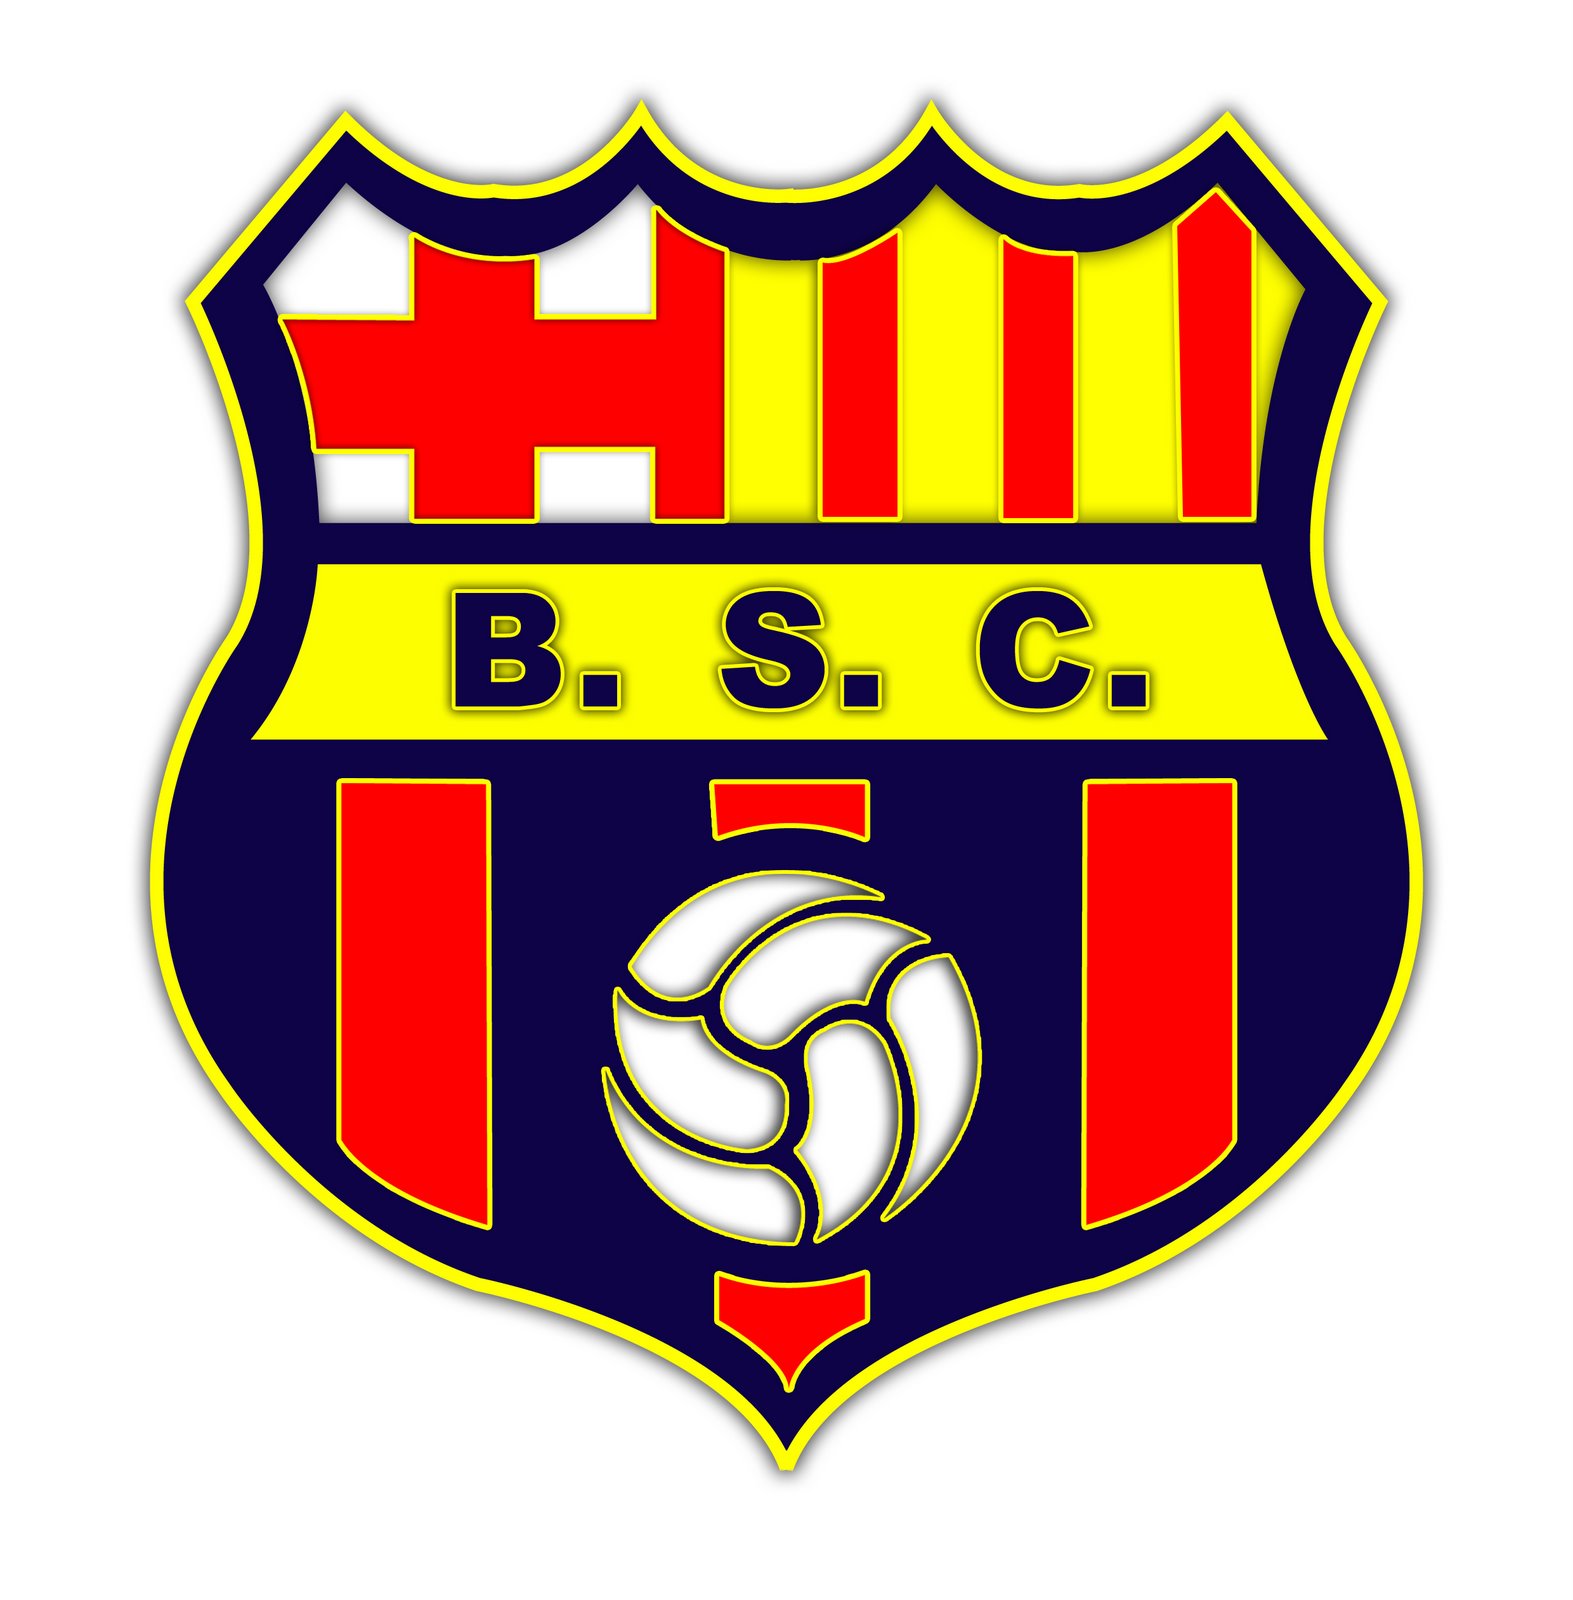 CLUB BARCELONA